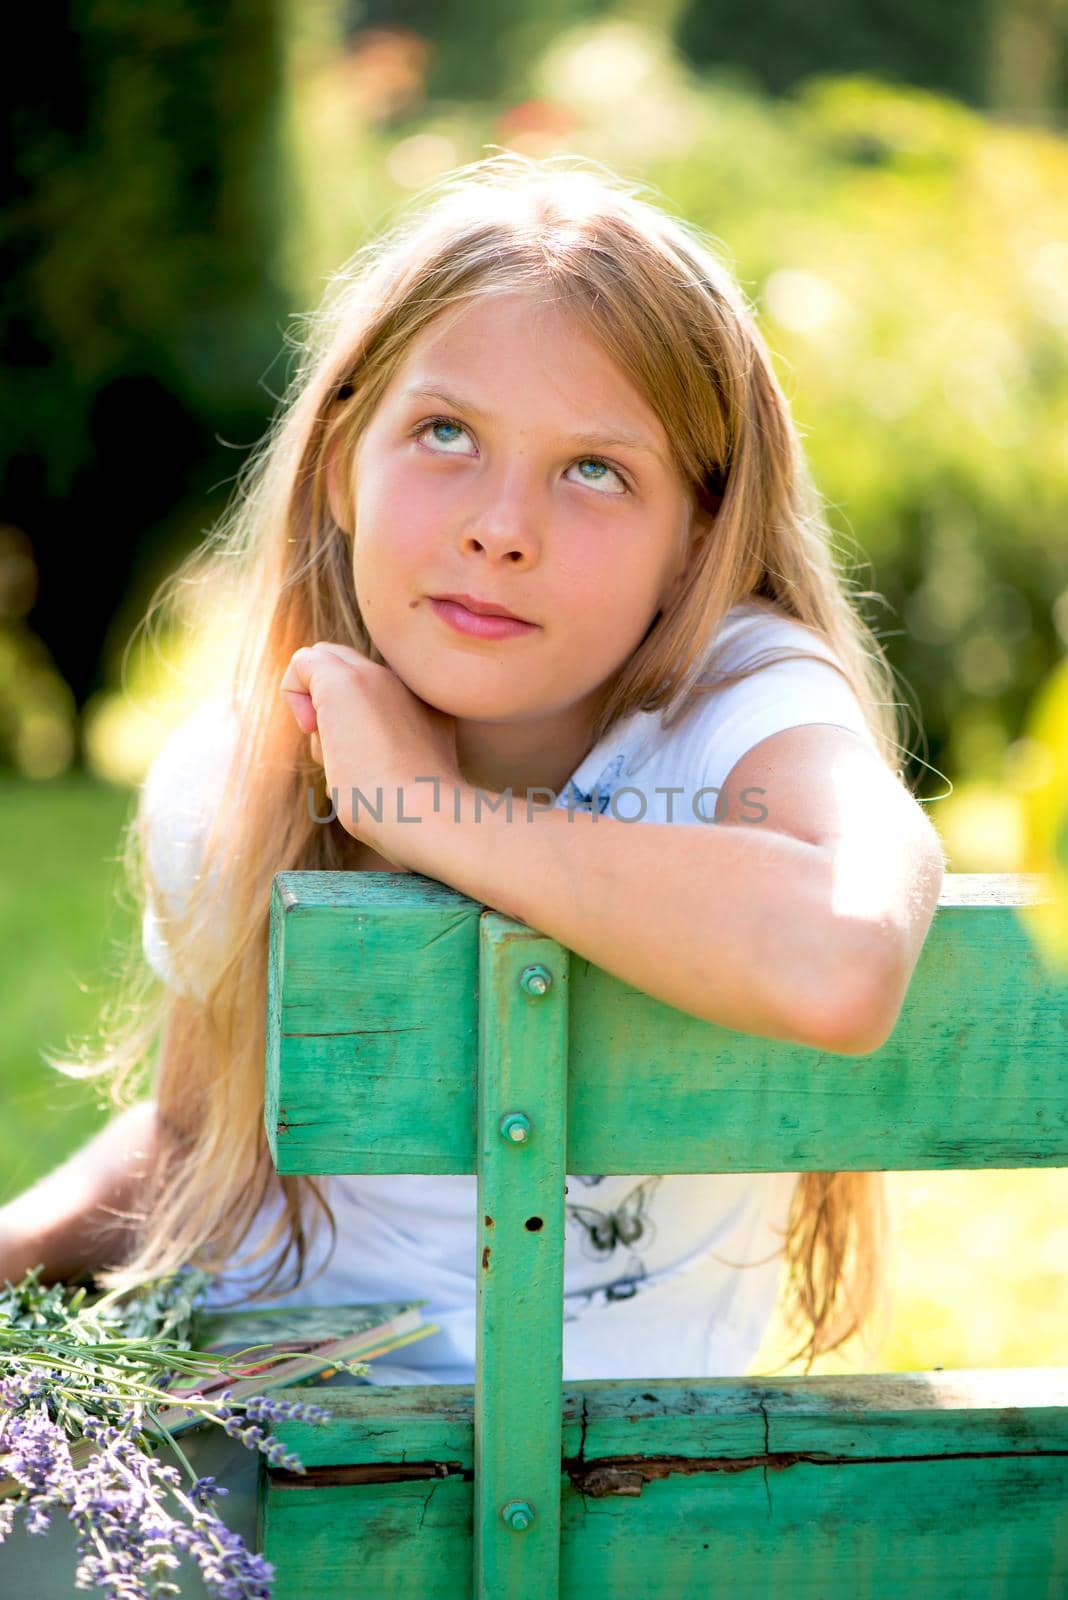 Portrait of little girl with lavender flower bouquet